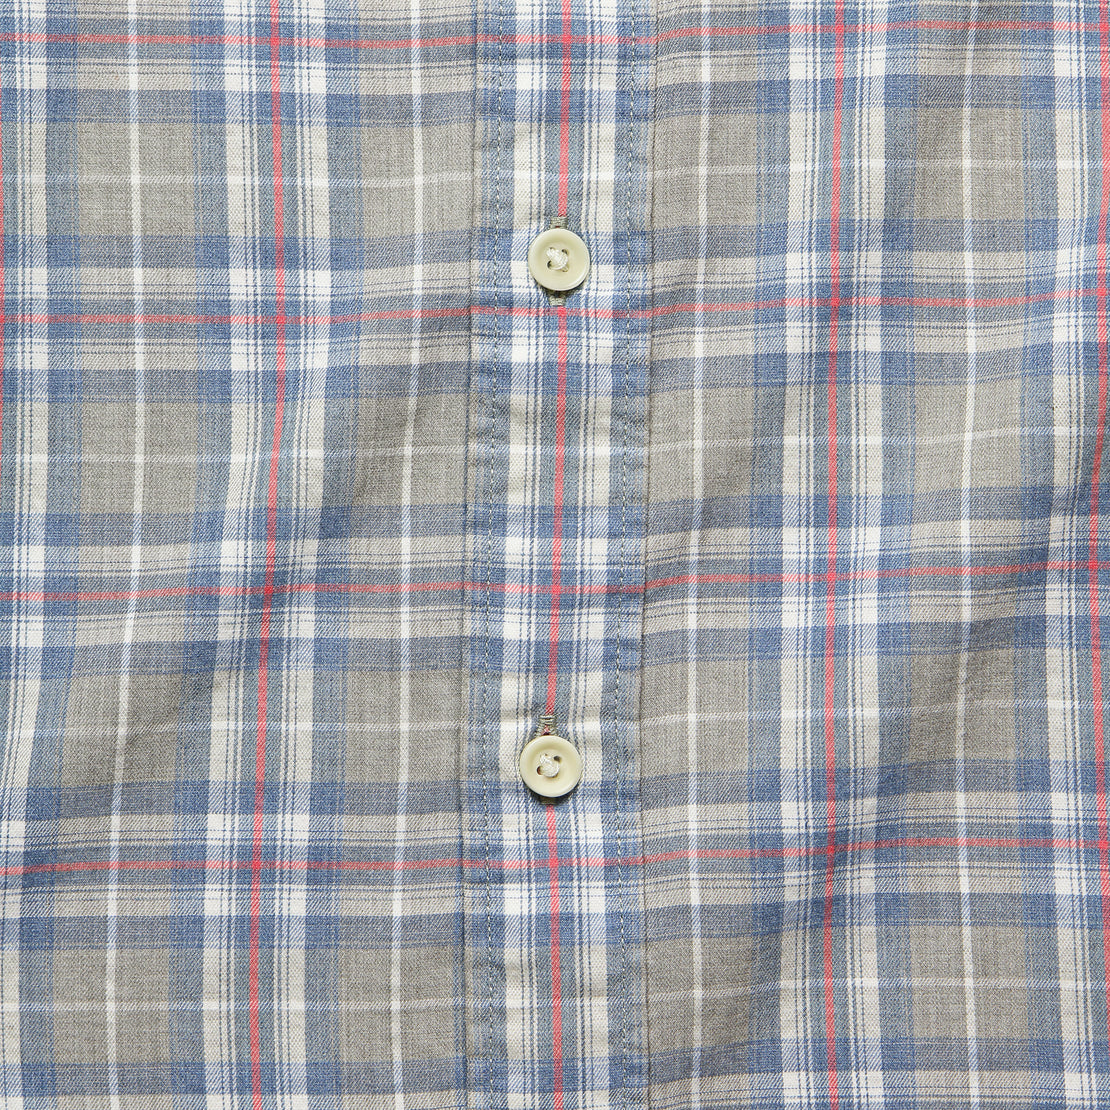 Movement Melange Shirt - Monterey Plaid - Faherty - STAG Provisions - Tops - L/S Woven - Plaid